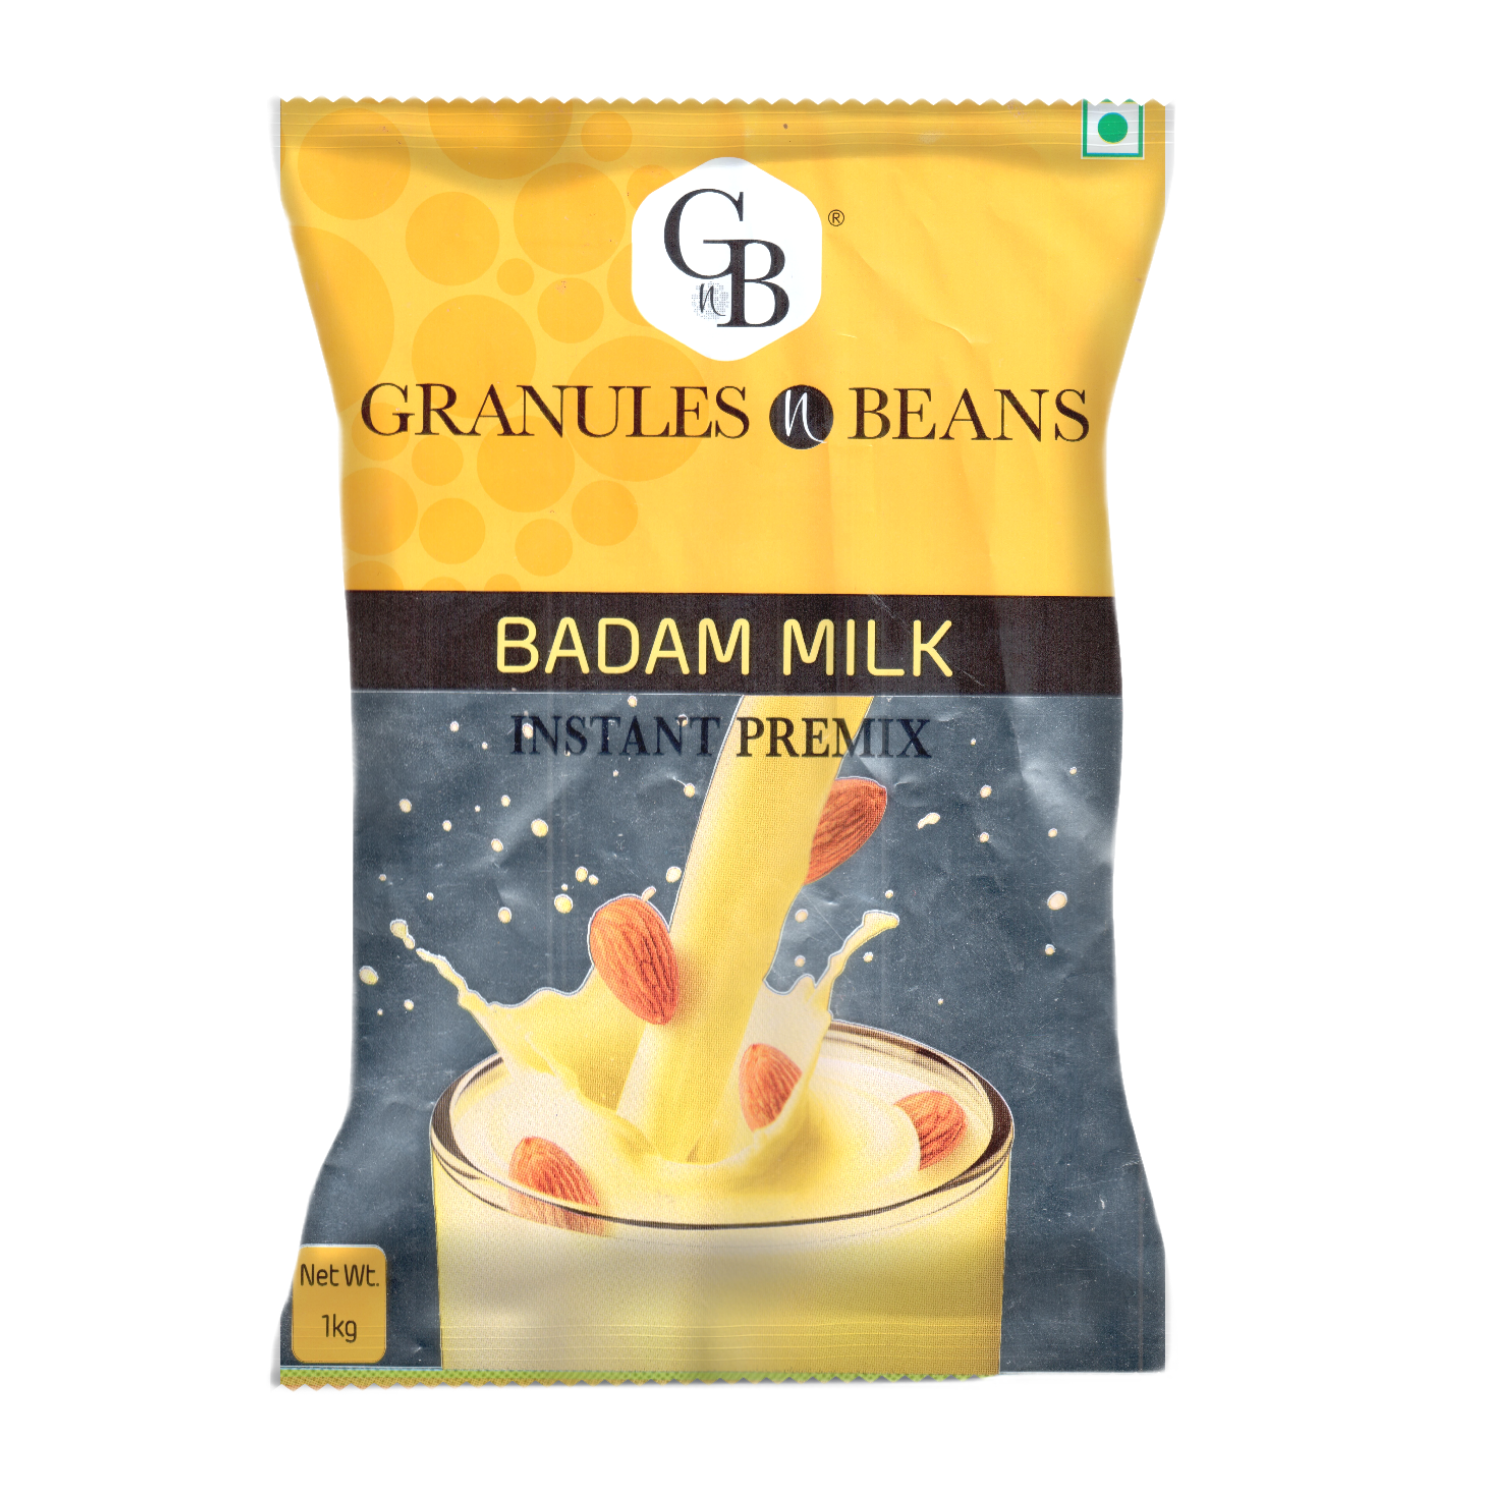 Granules n Beans Badam Milk Instant Premix - 1kg